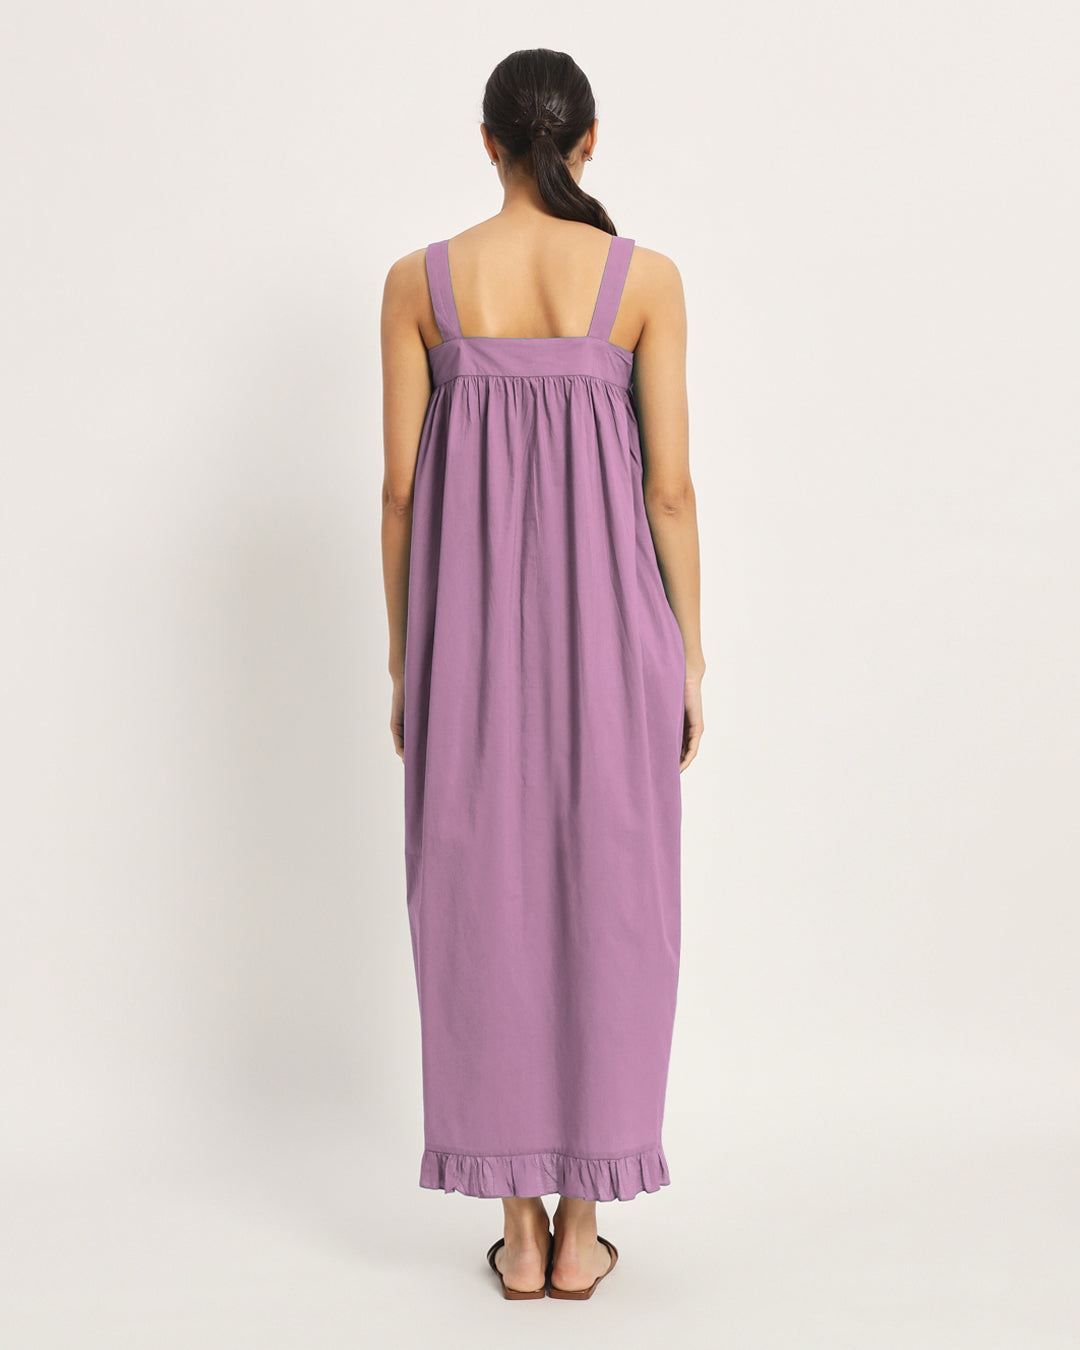 Combo: Iris Pink & Wisteria Purple Preggo Pretty Maternity & Nursing Dress